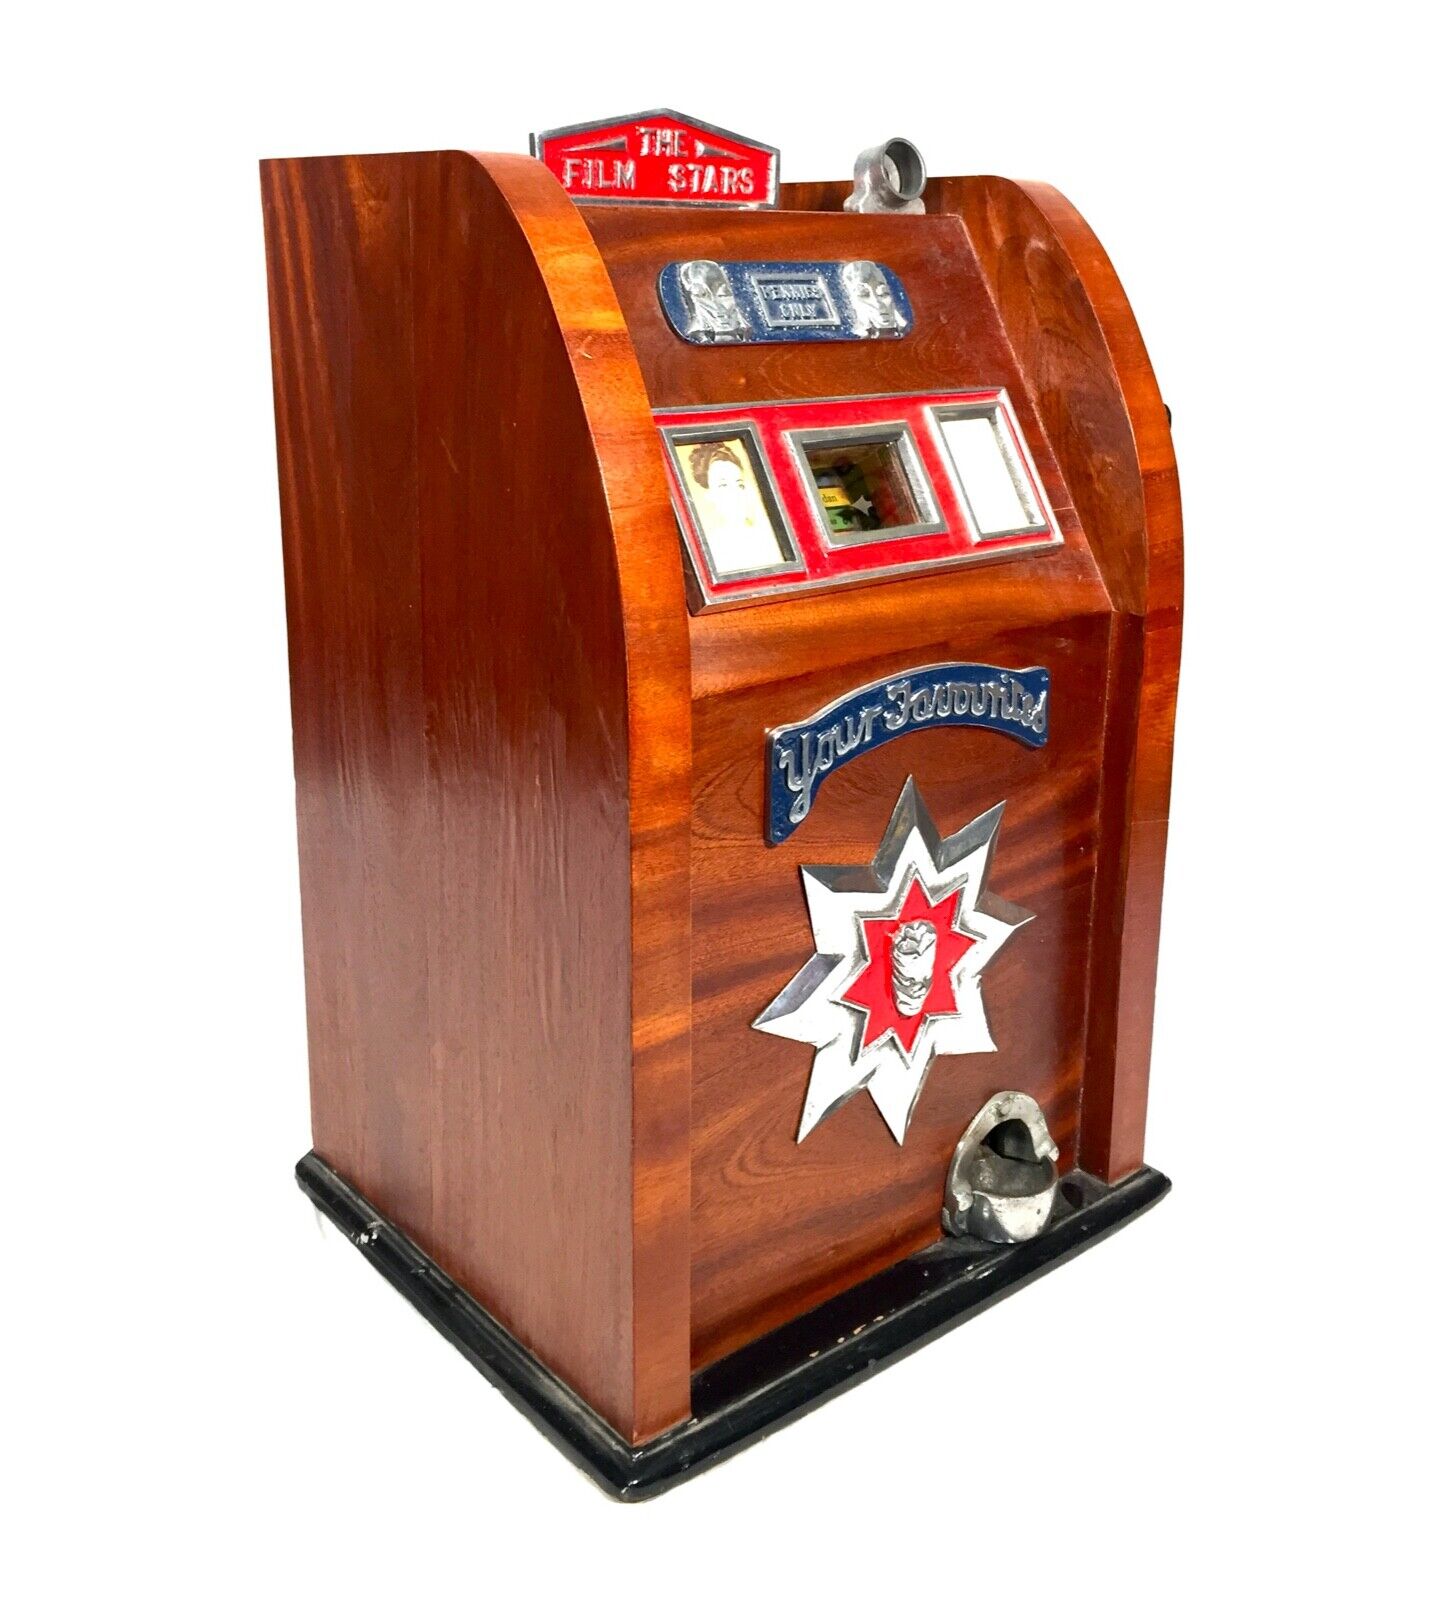 Antique One Arm Bandit Arcade Coin Operated Games Machine 'Film Stars' c.1940